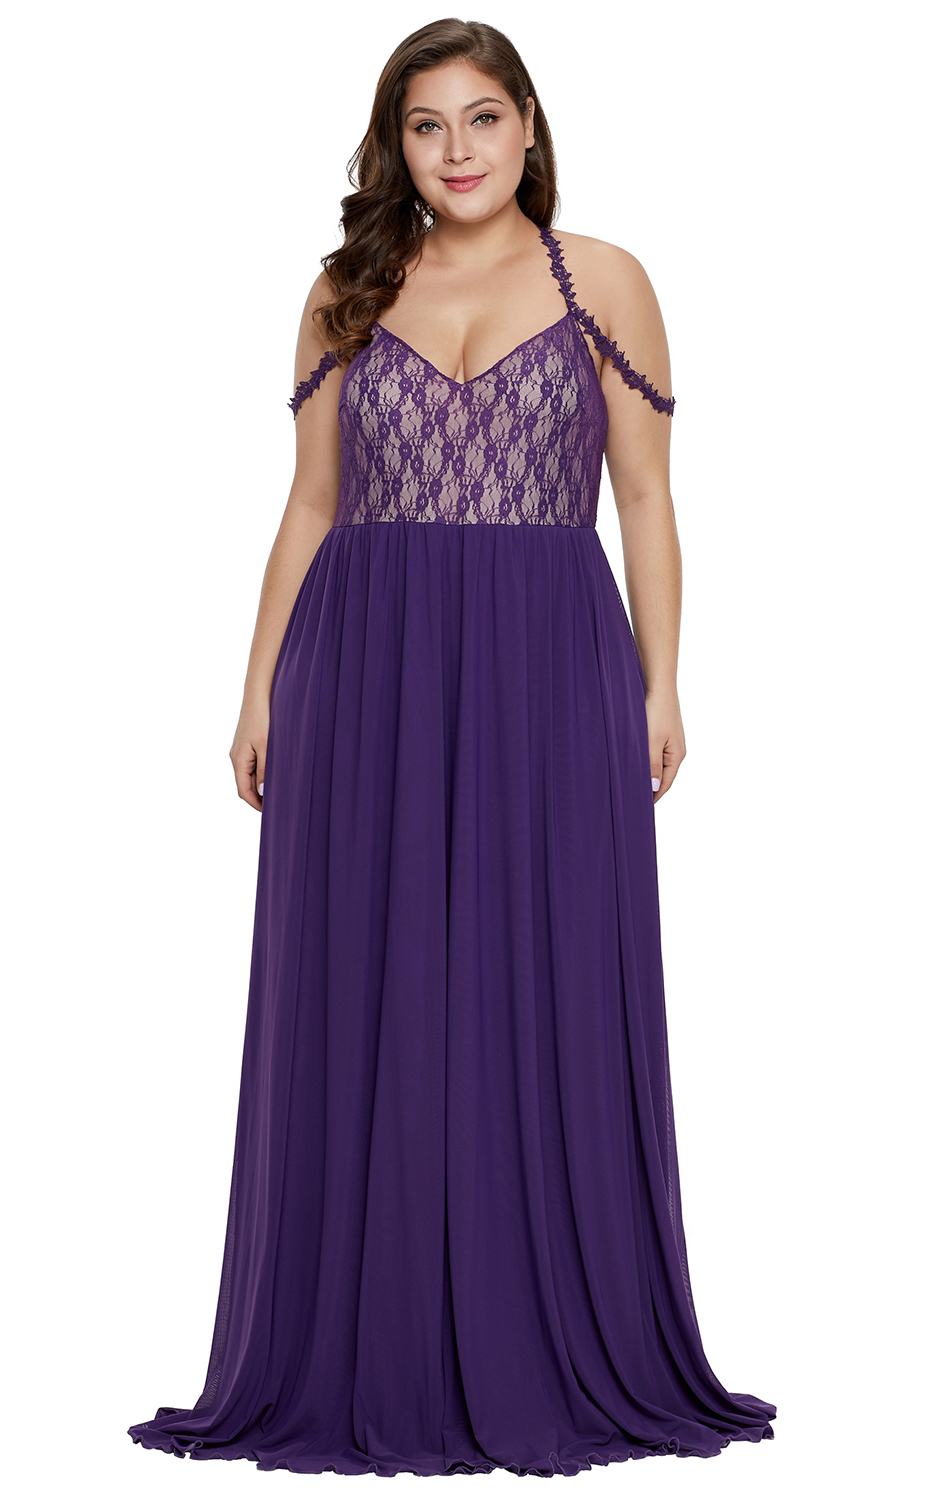 BY611063-8 Purple Lace Bodice Hollow-out Plus Size Maxi Dress